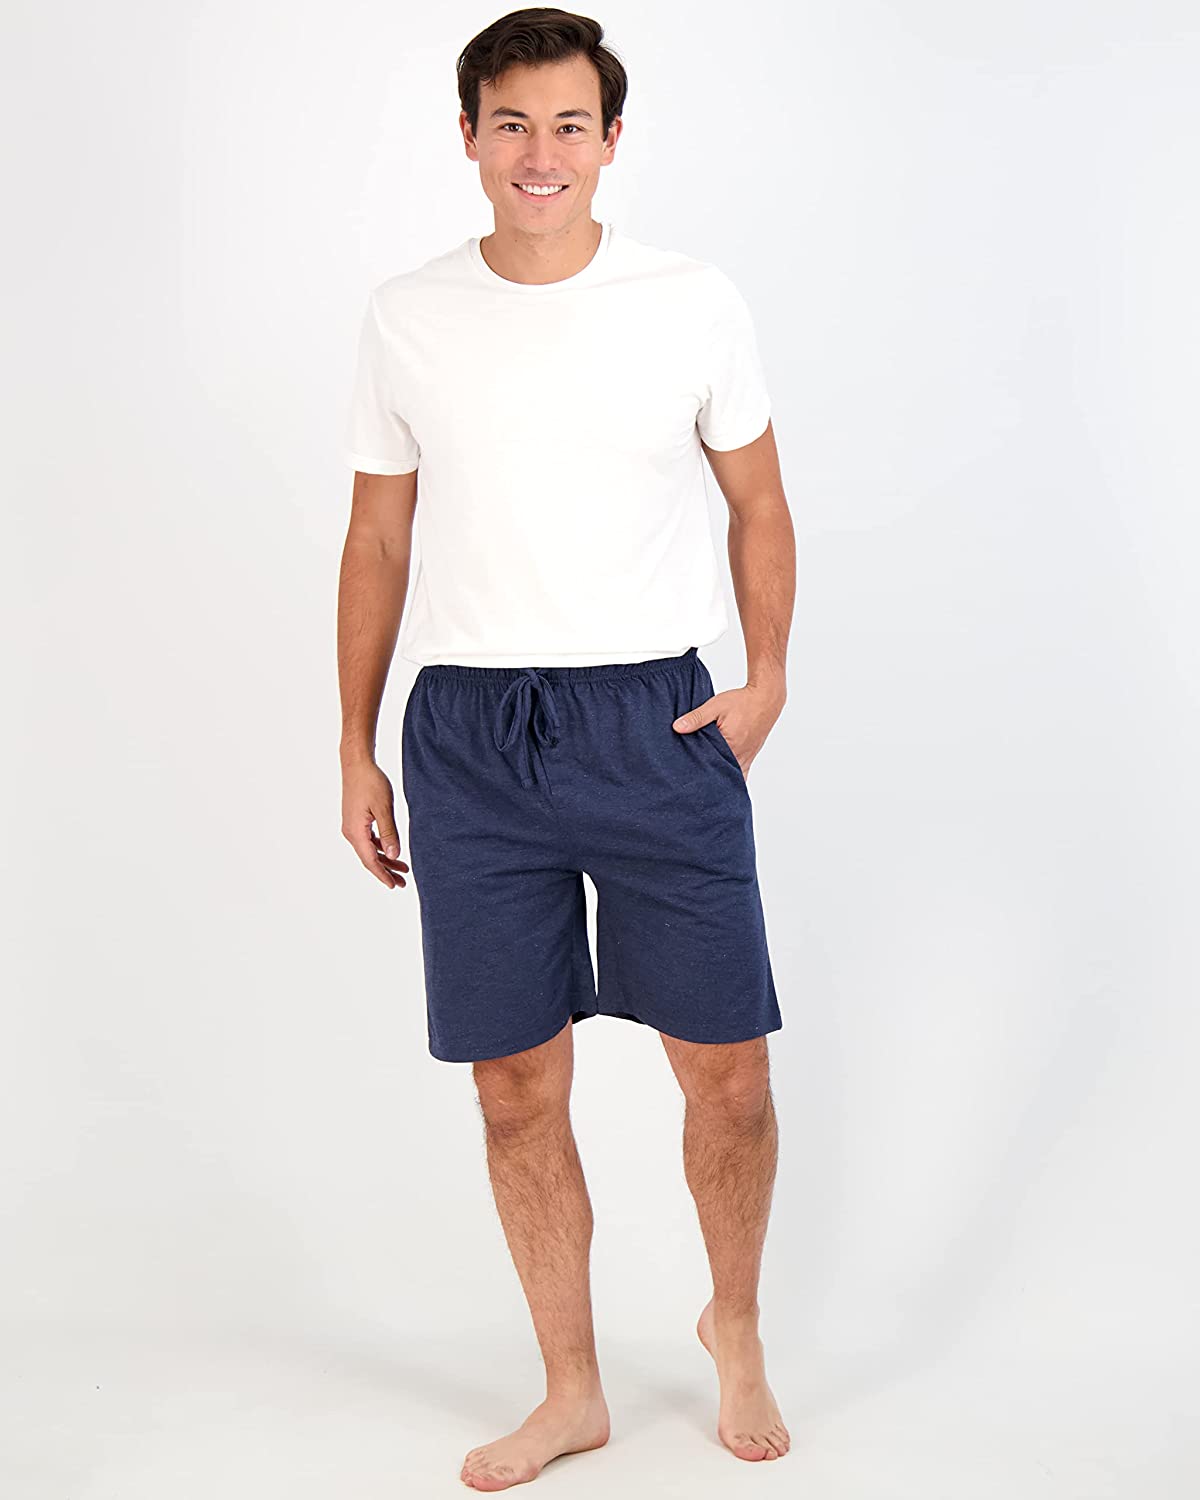 Men’s Cotton Ultra-Soft Knit Sleep Pajama Shorts & Lounge Wear